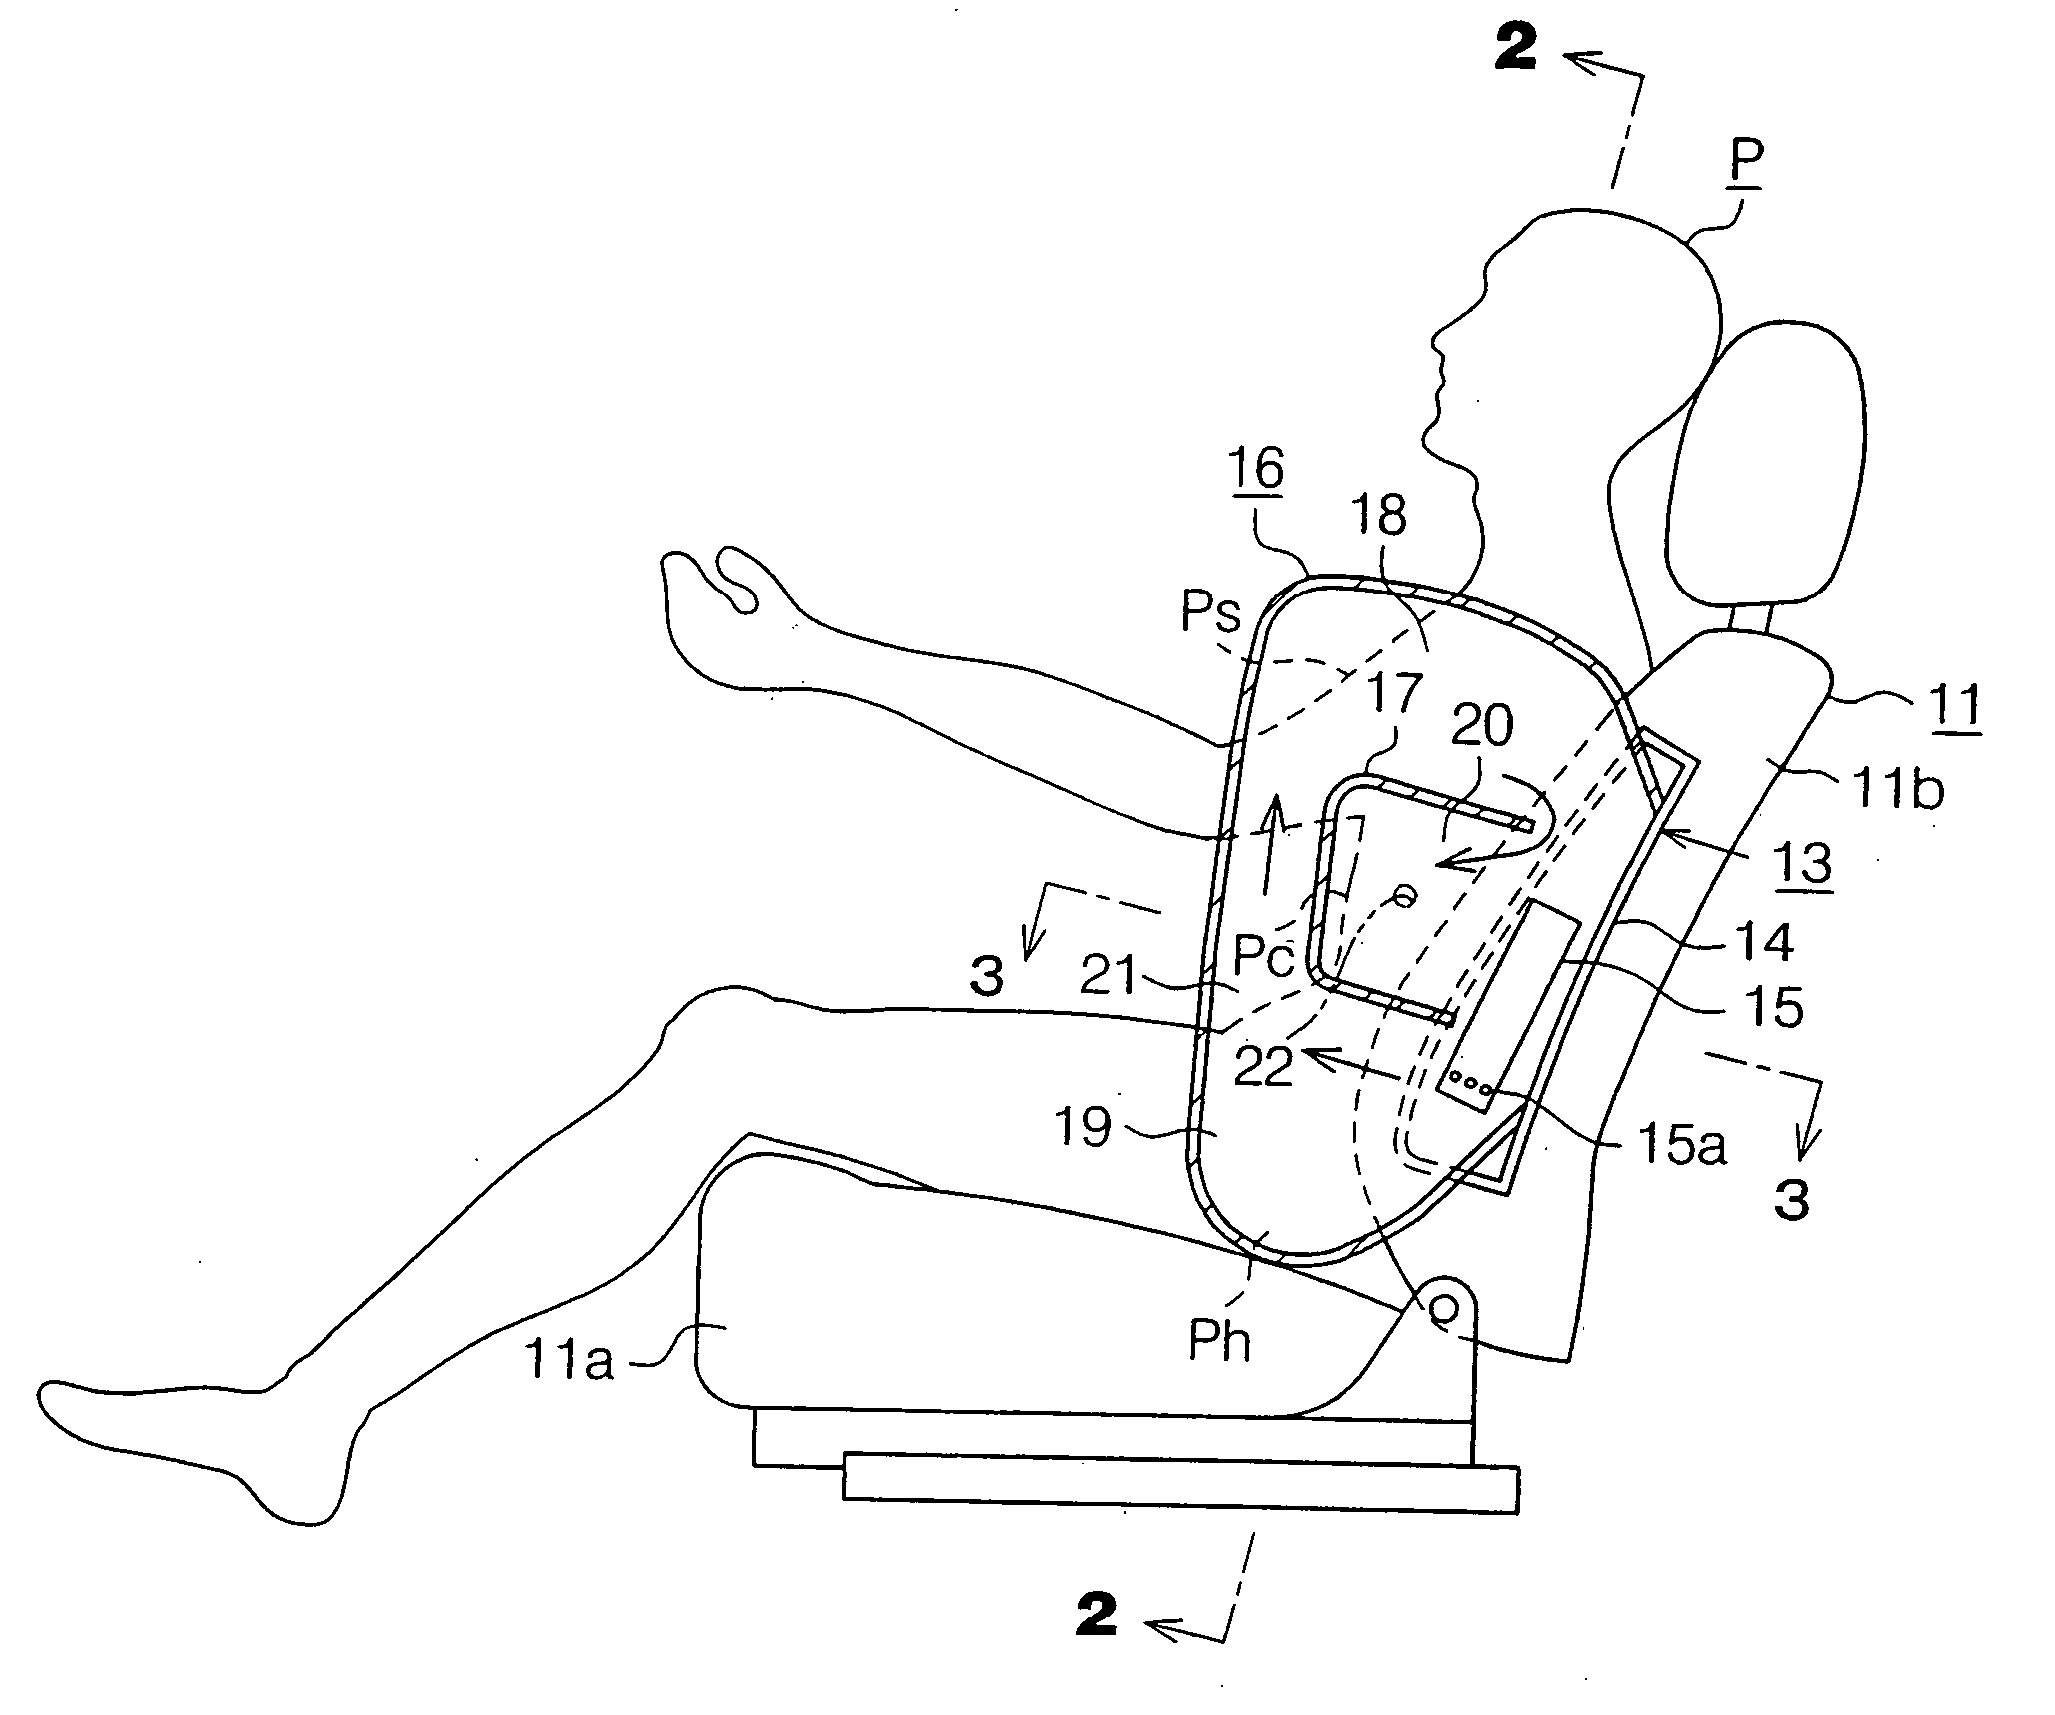 Side airbag apparatus